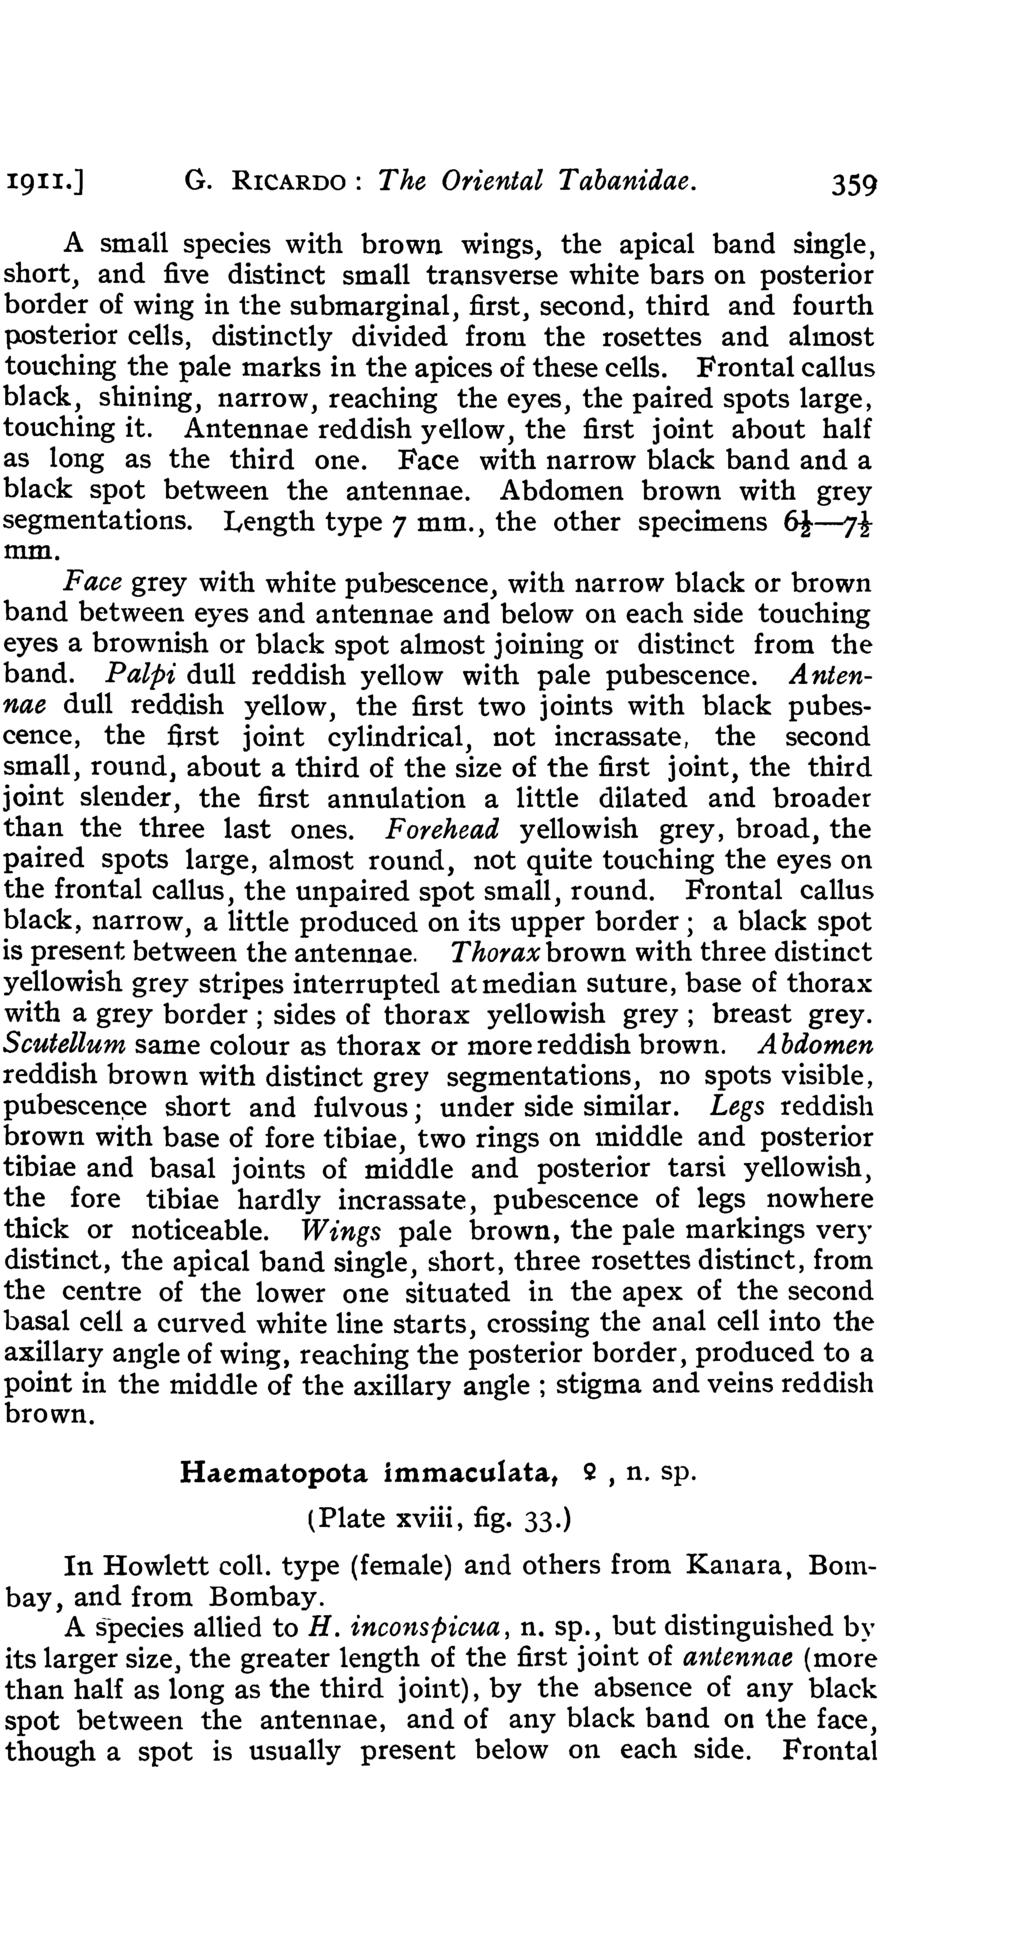 191I.] G. RICARDO: The Oriental Tabanidae.